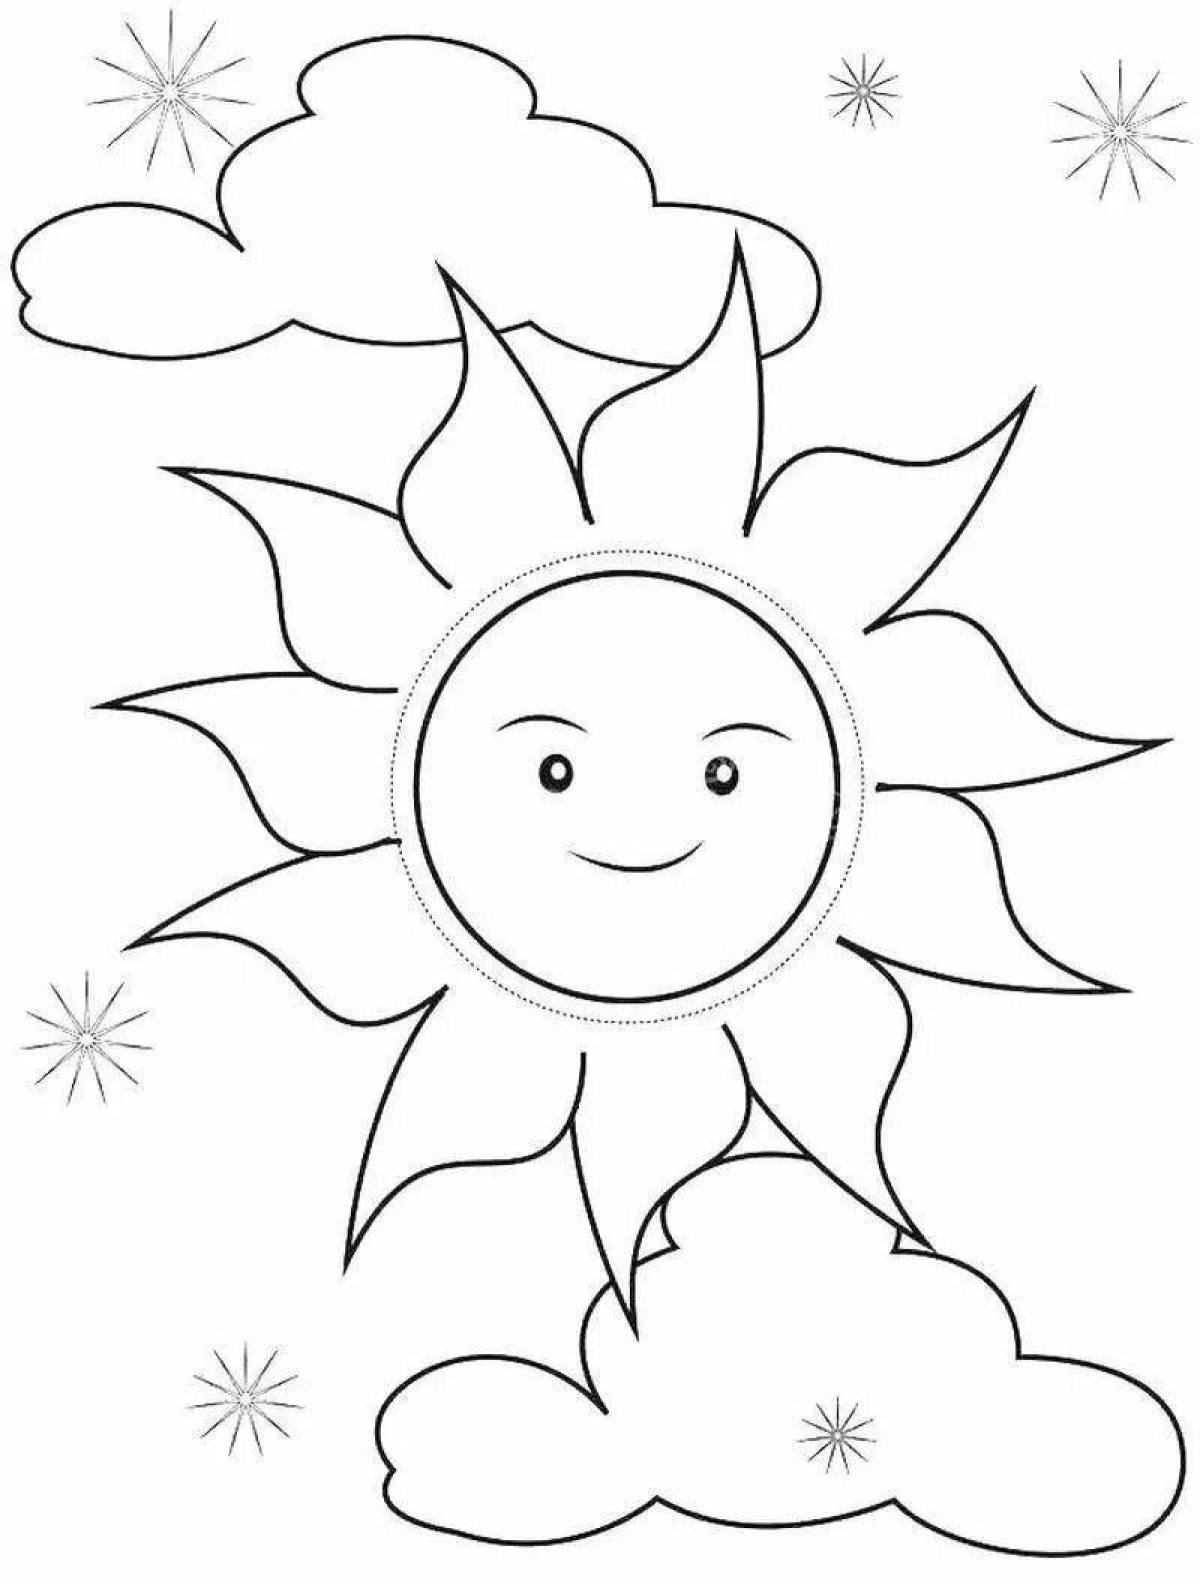 Rampant carnival sun coloring page